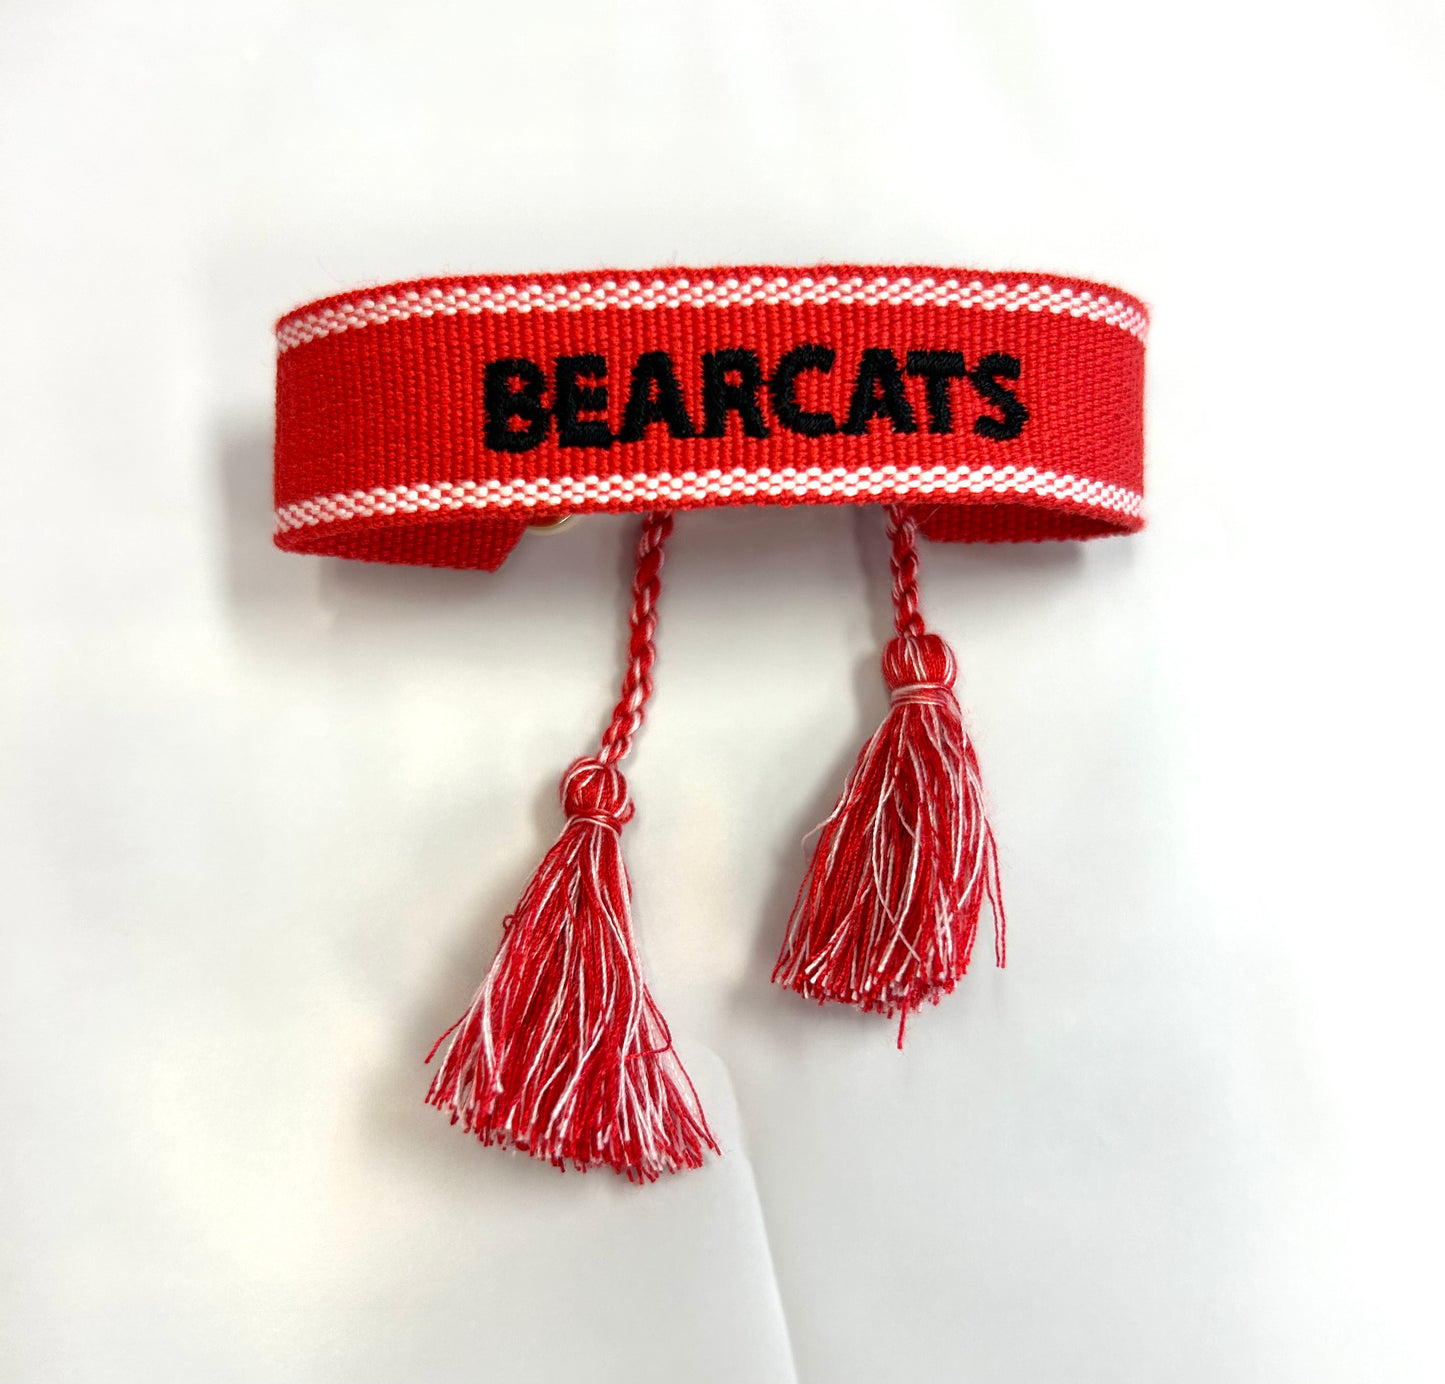 Bearcats Adjustable Tassel Bracelet